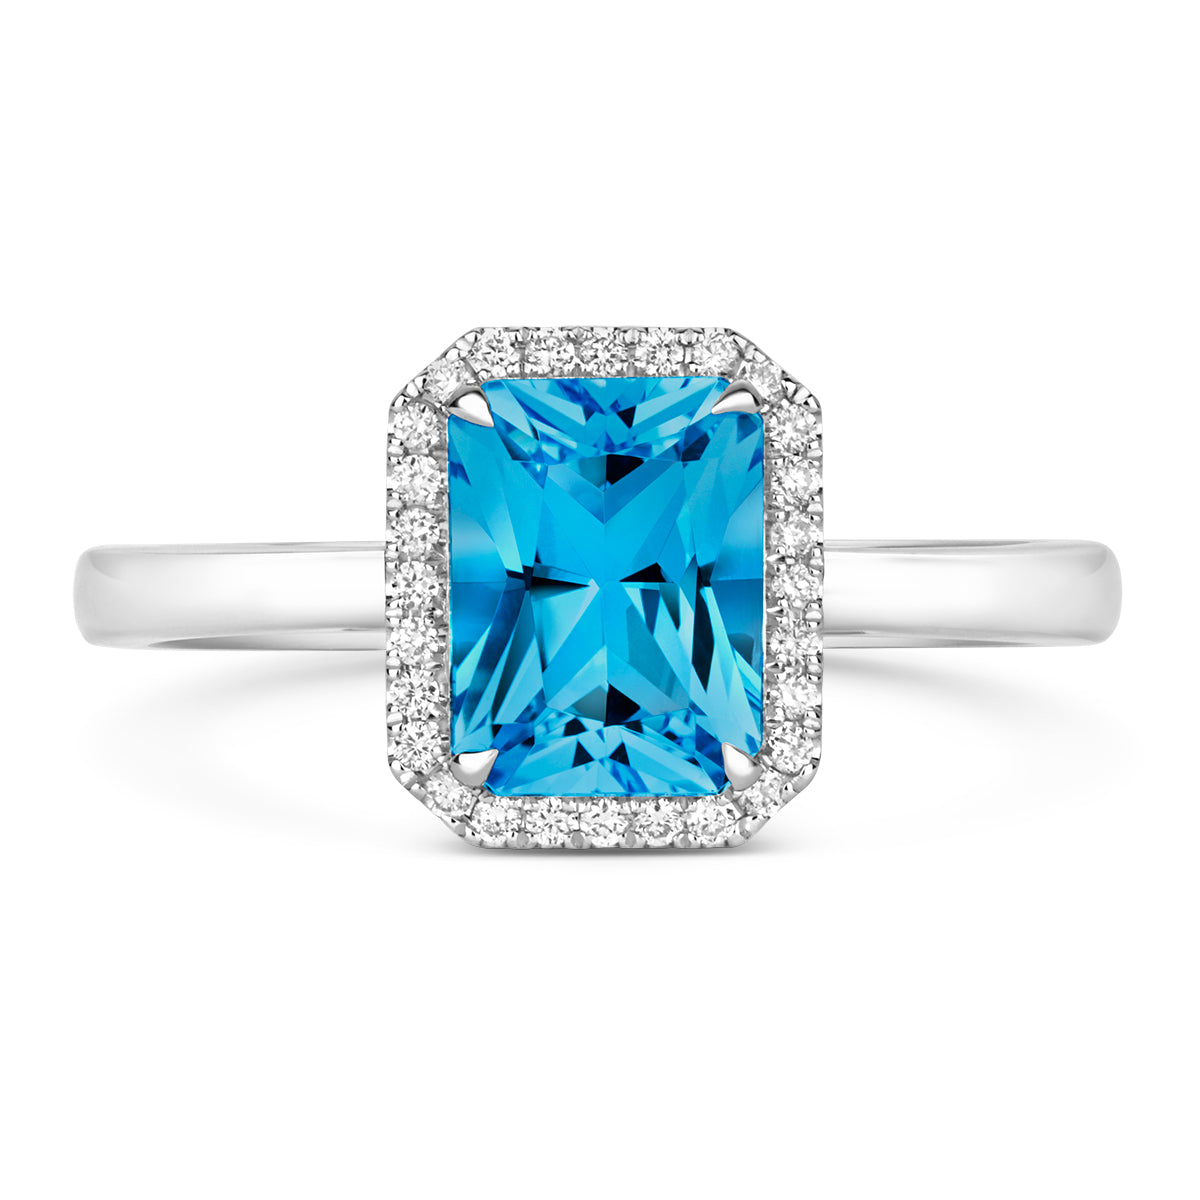 TIVON 18ct White Gold Emerald Cut Blue Topaz and Diamond Ring